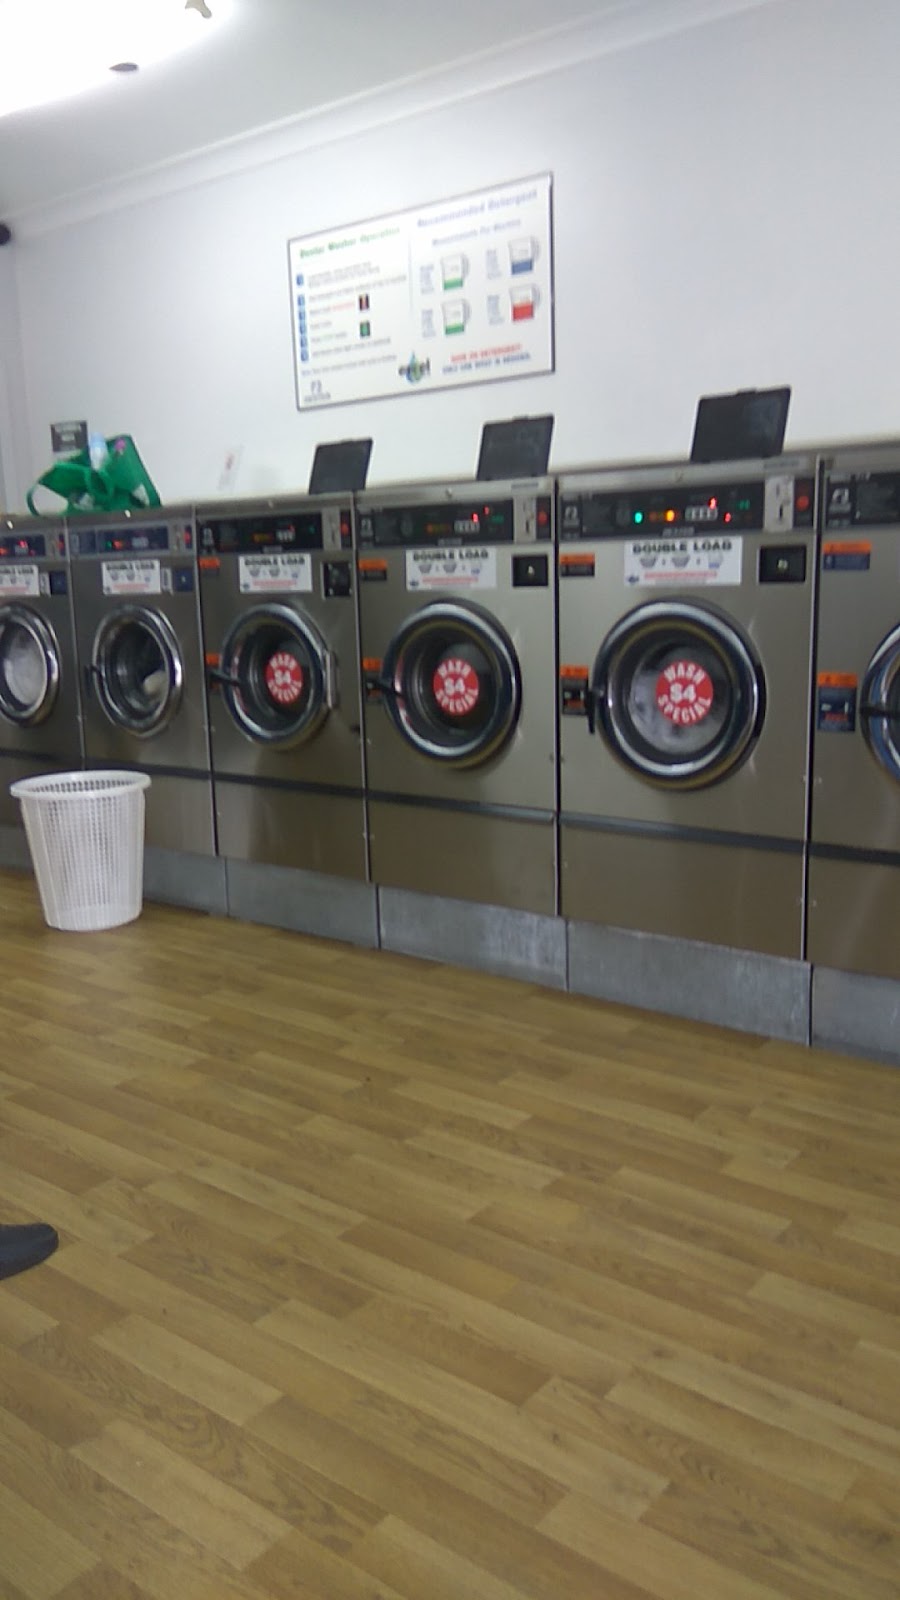 Greenslopes Laundromat | laundry | 4/582 Logan Rd, Greenslopes QLD 4120, Australia